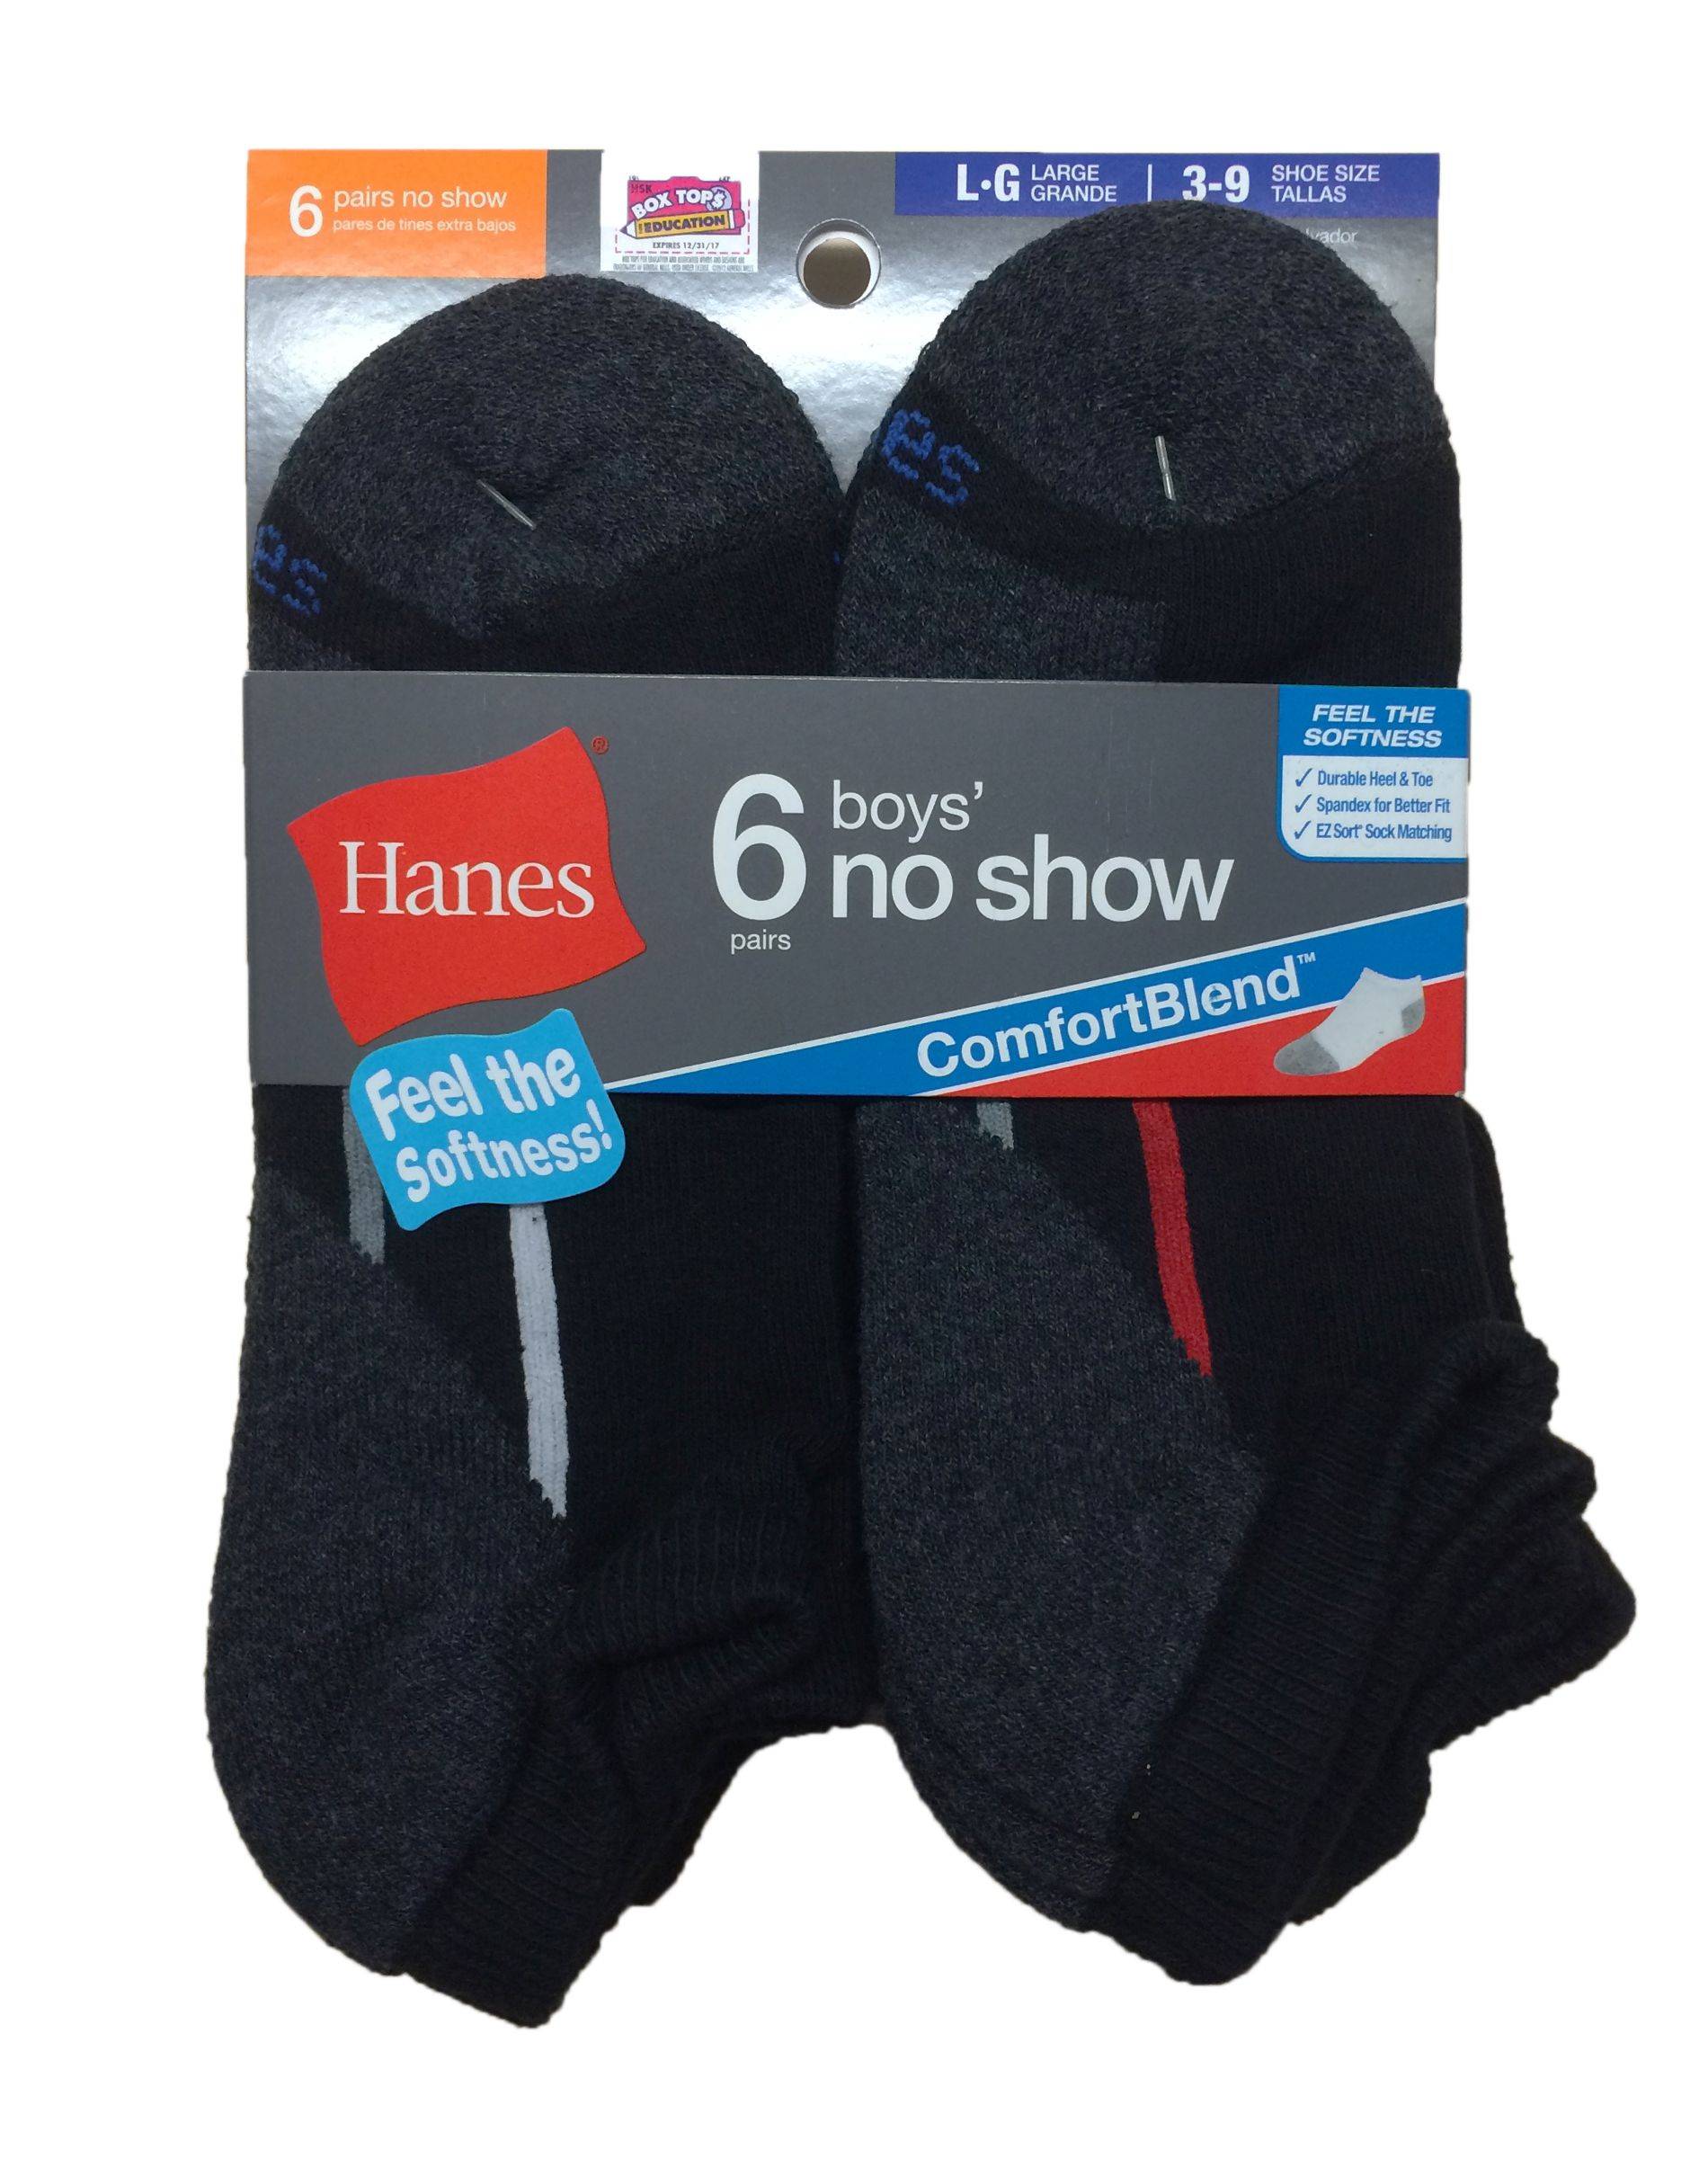 Hanes Style 434/6 Hanes Boys No Show Comfortblend White EZ Sort Socks